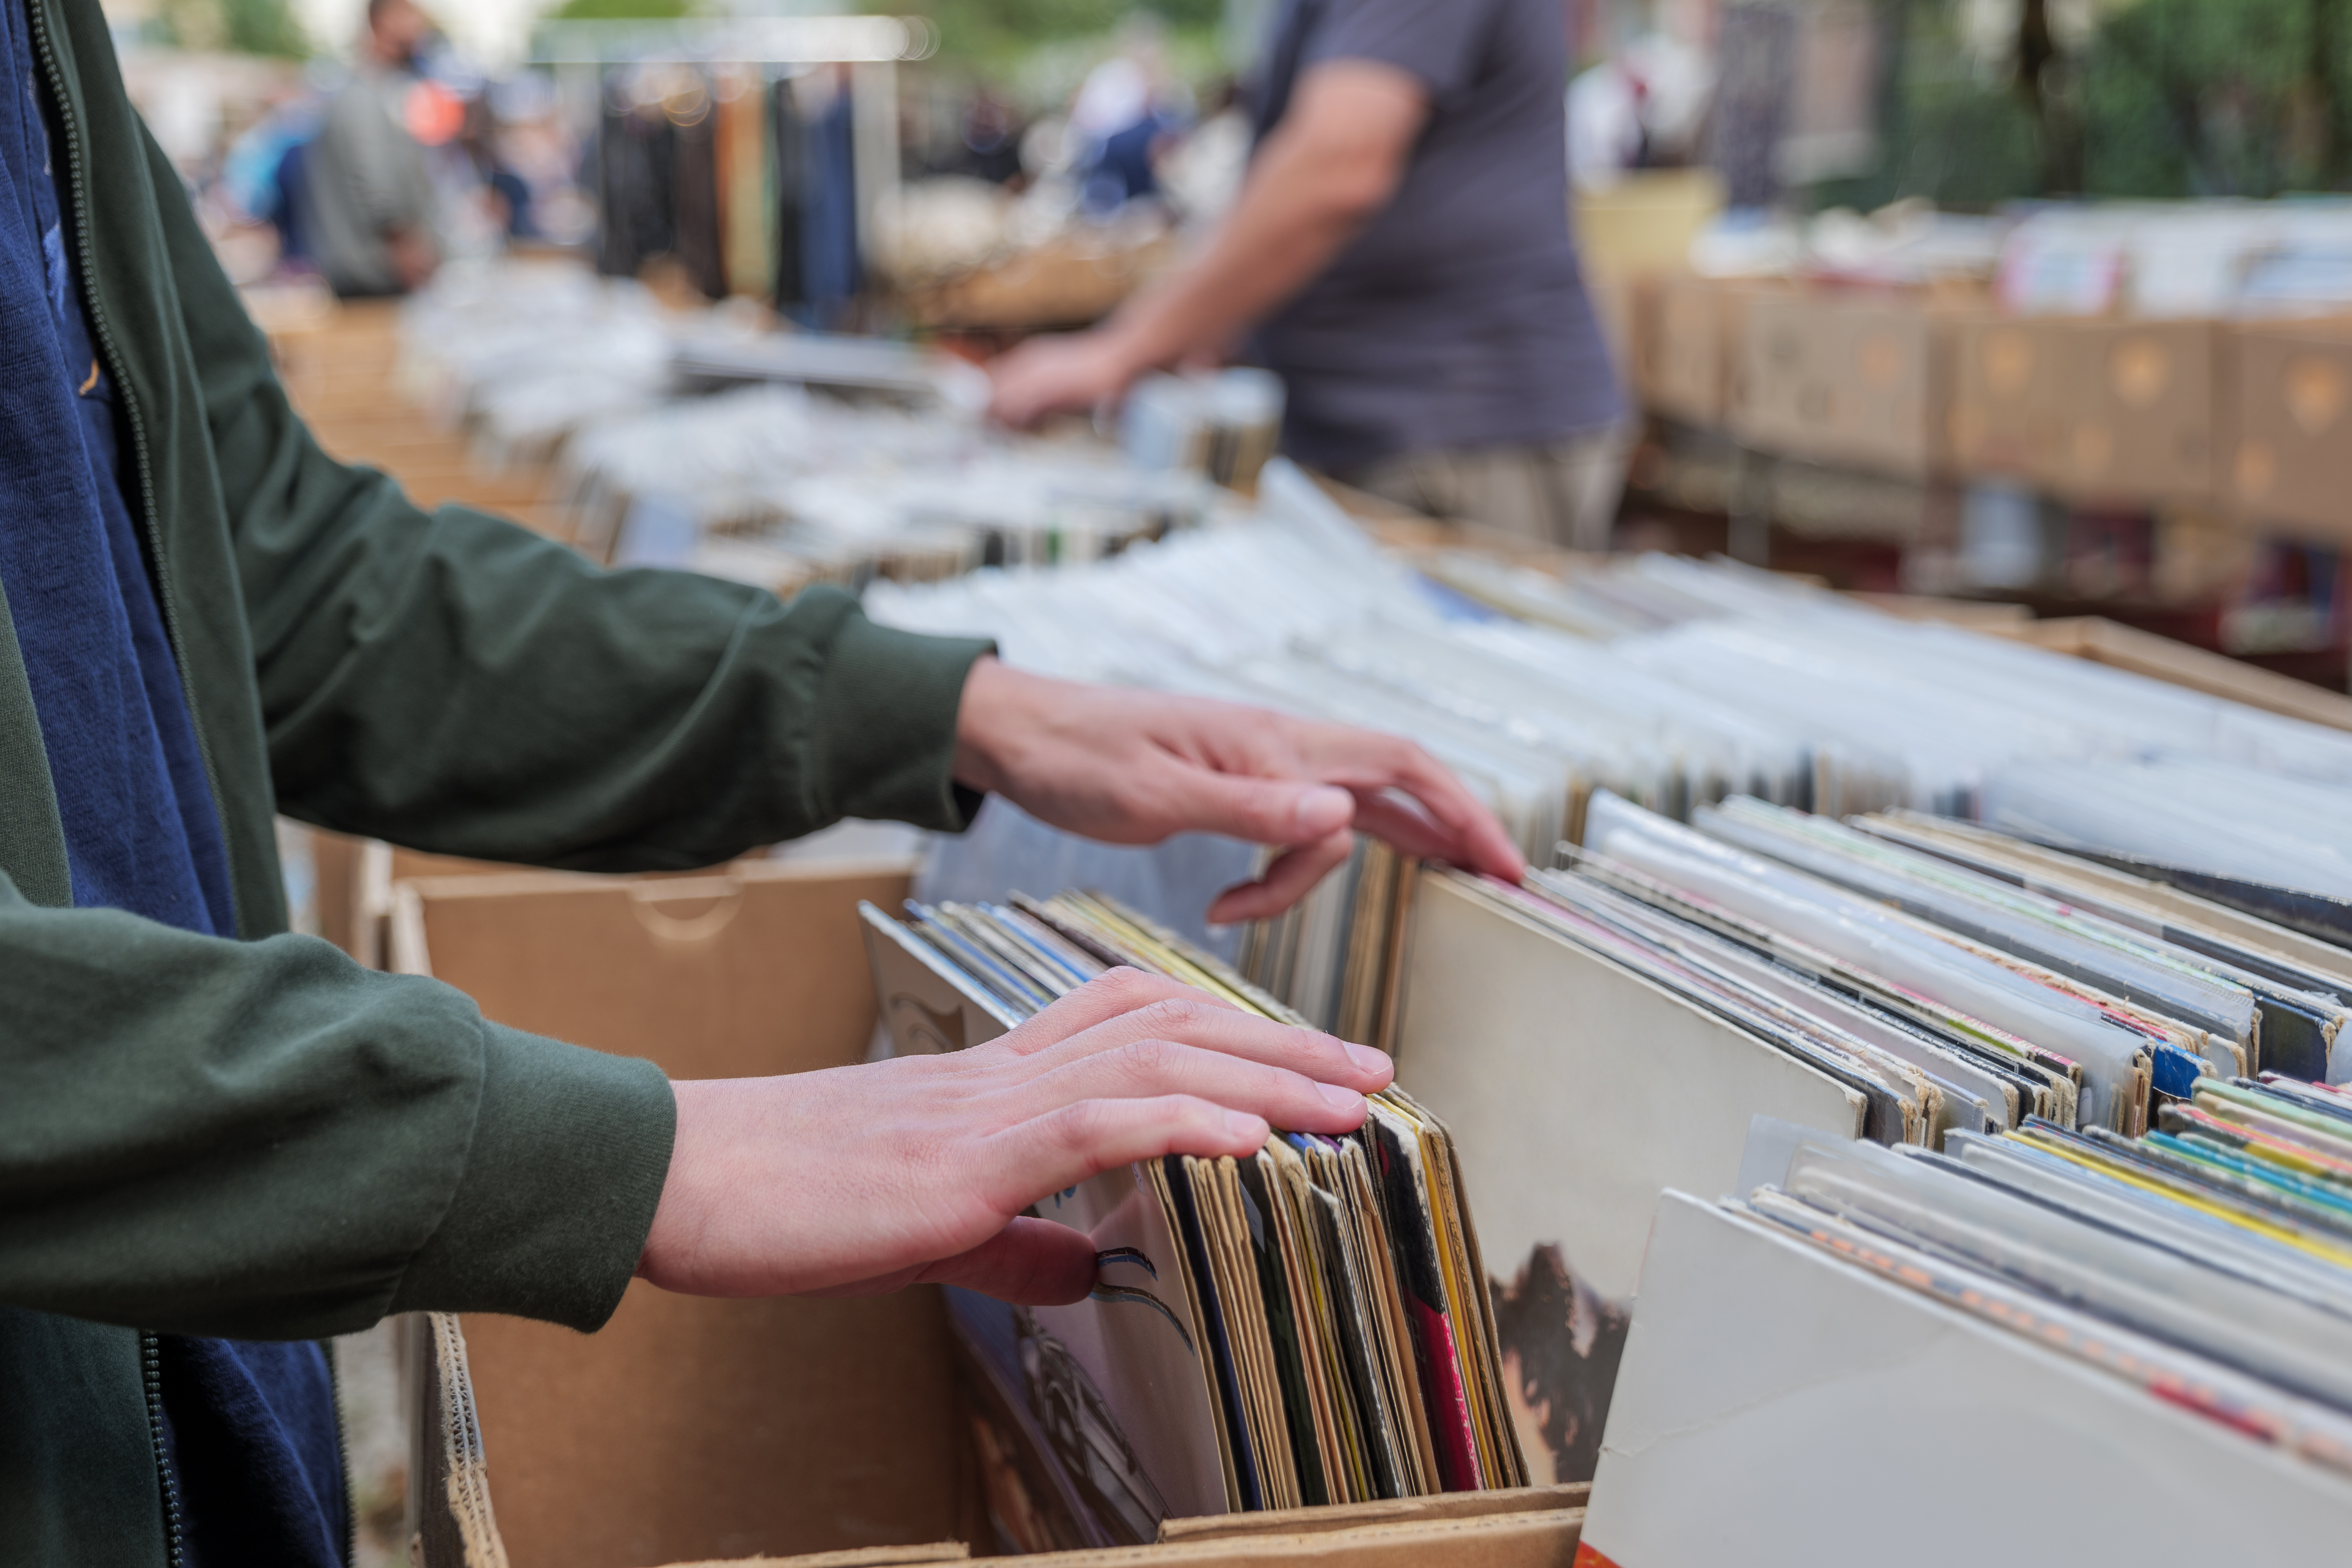 A shopper flipping through vinyl records at a record store